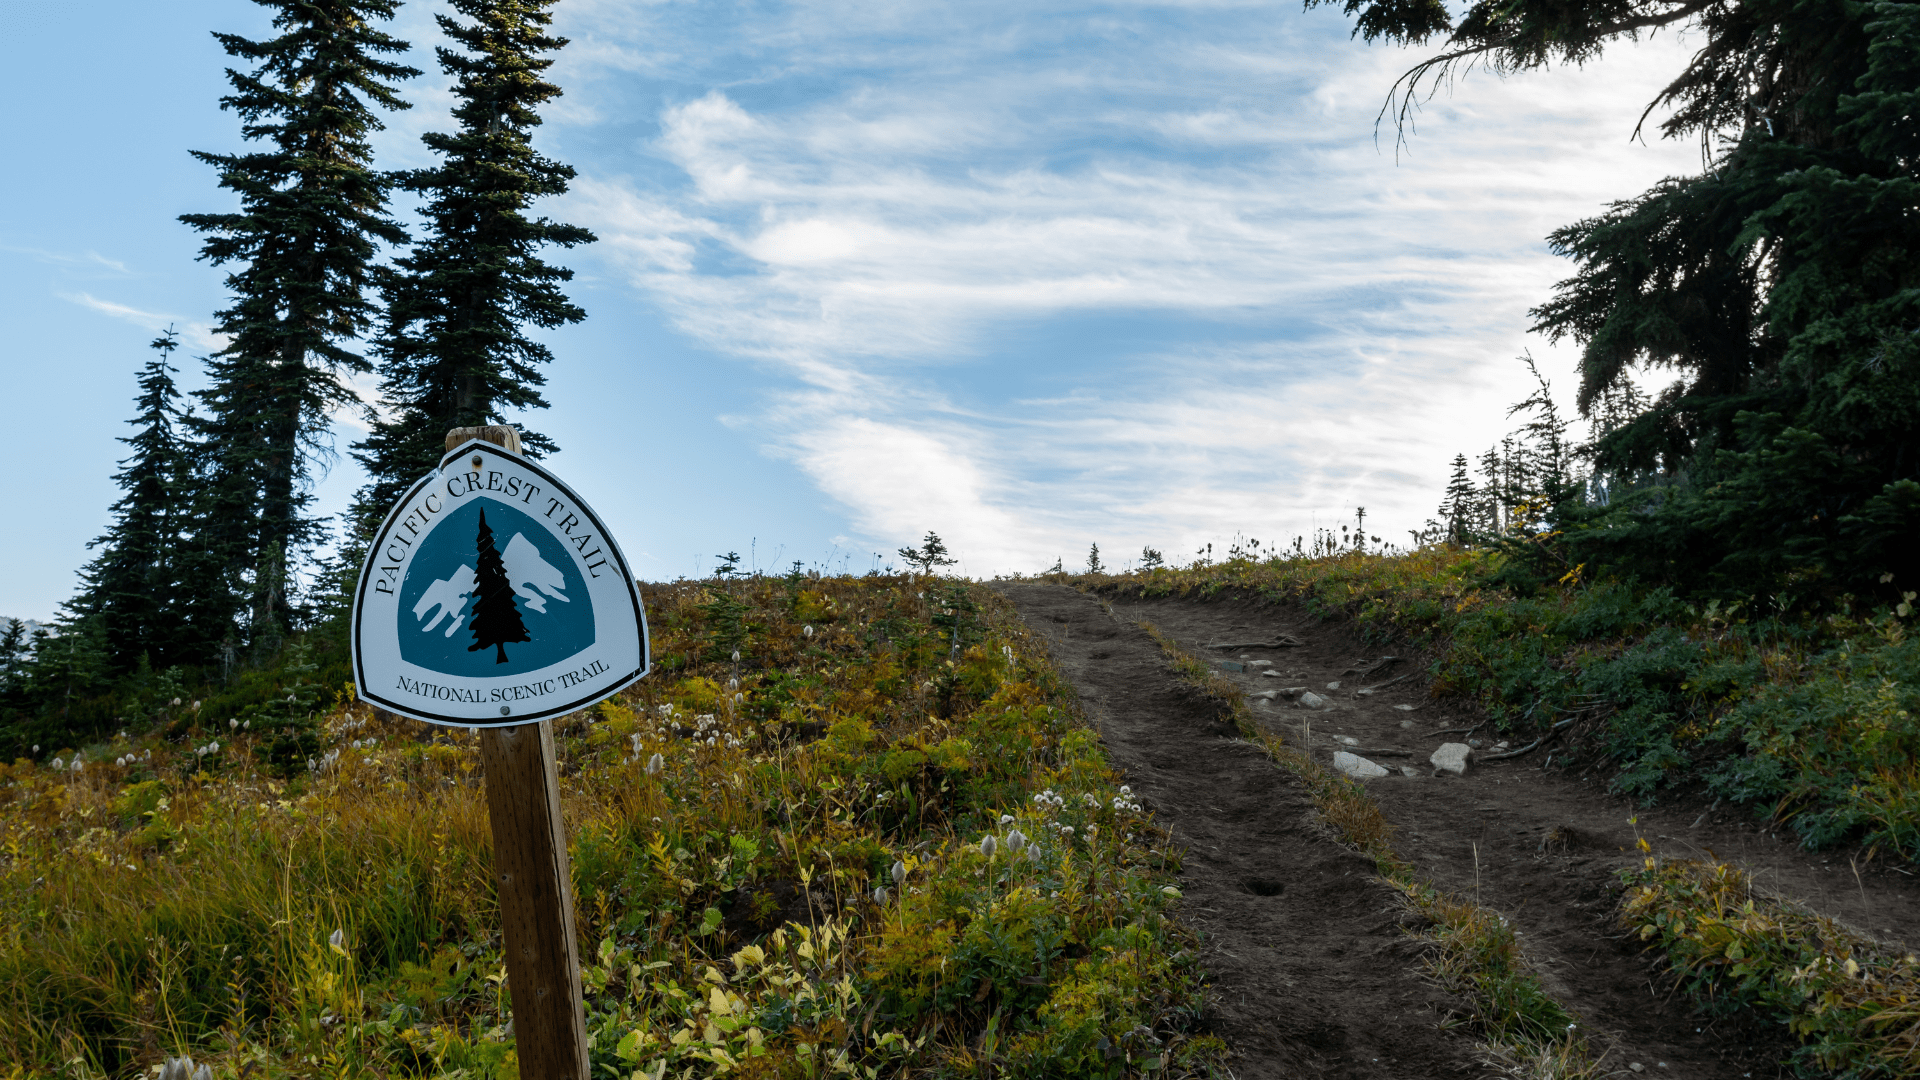 Pacific crest trail marker